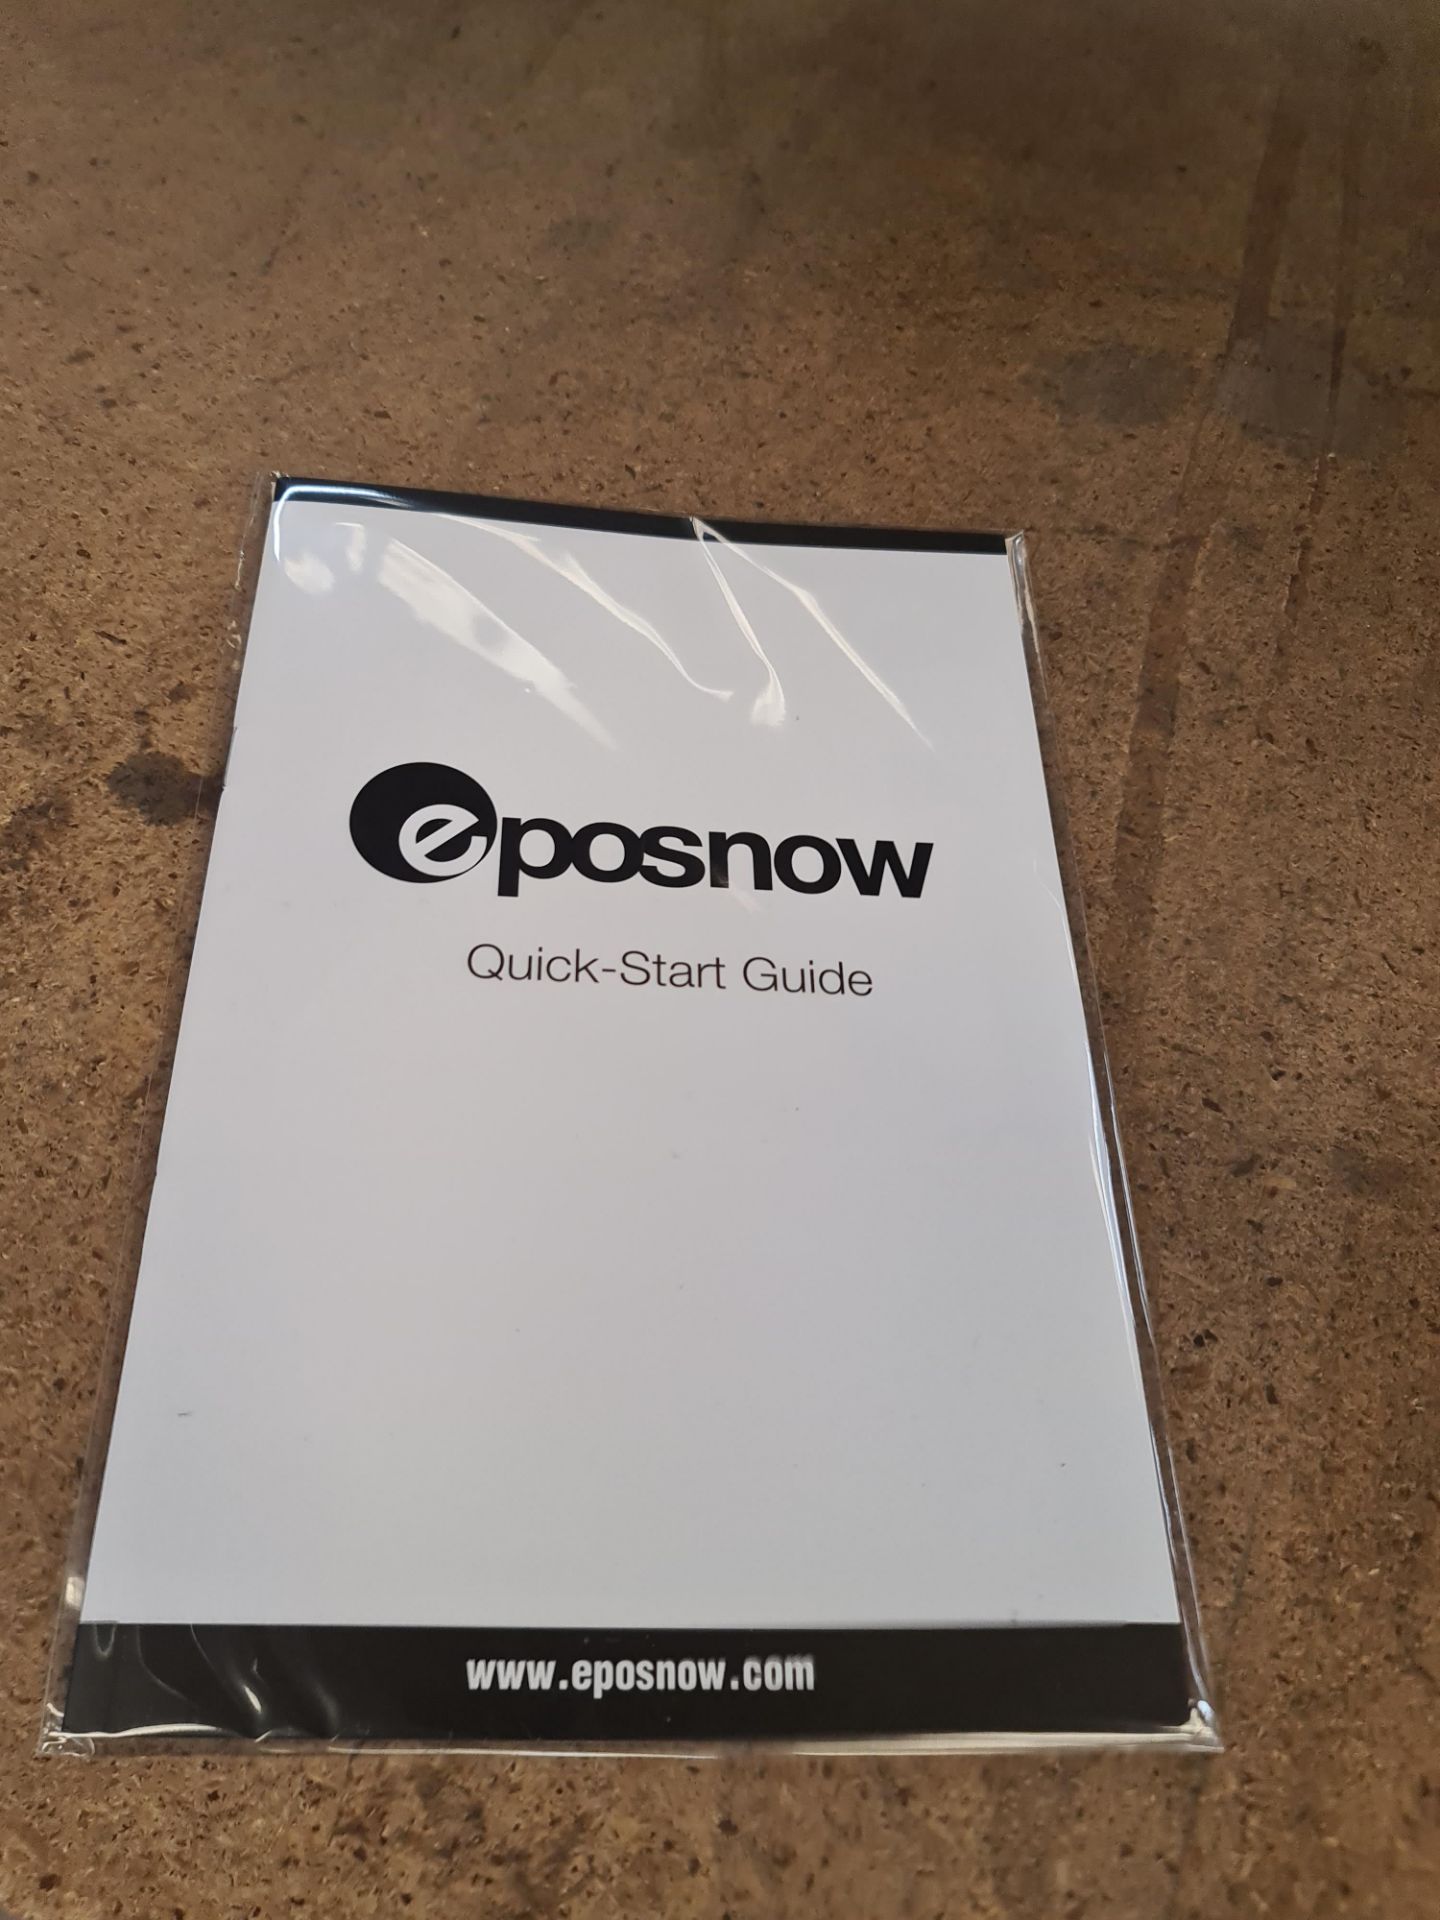 EPOSNOW touchscreen EPOS terminal plus cash drawer & EPOSNOW receipt printer. This lot is being sold - Image 11 of 12